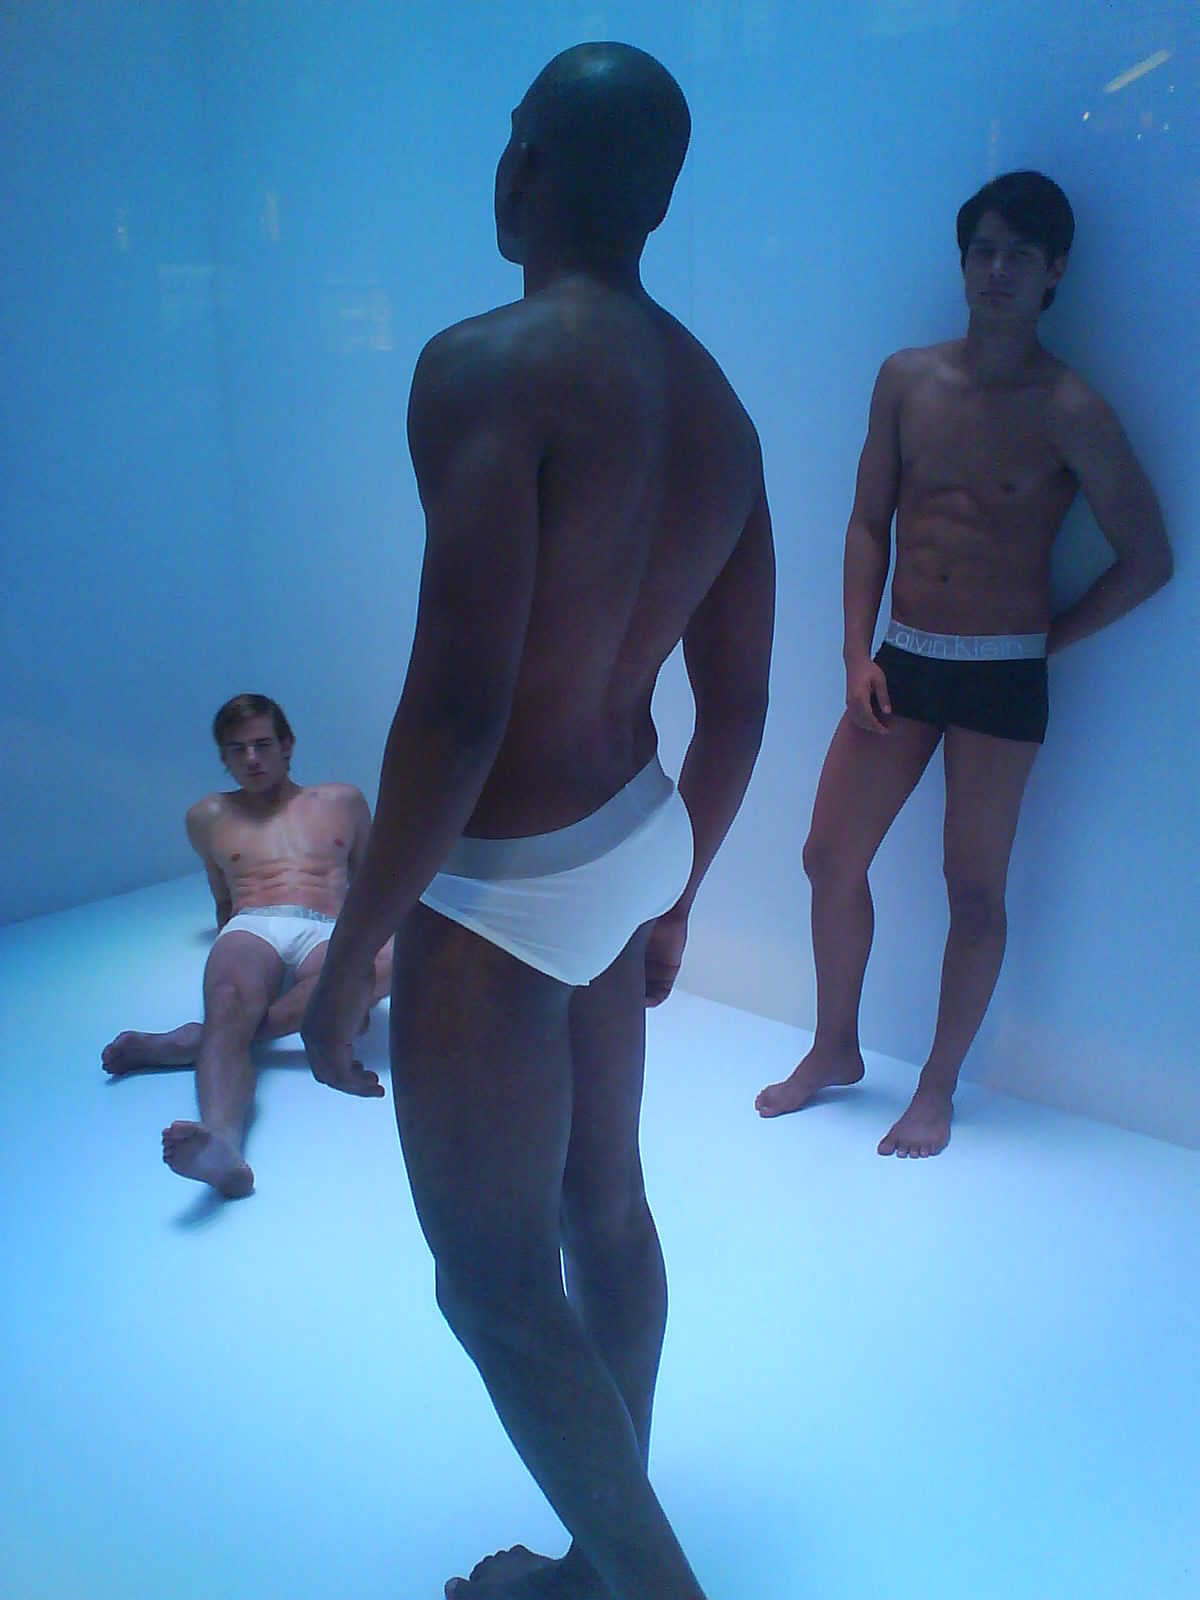 andrea pasutti share teen underwear models photos